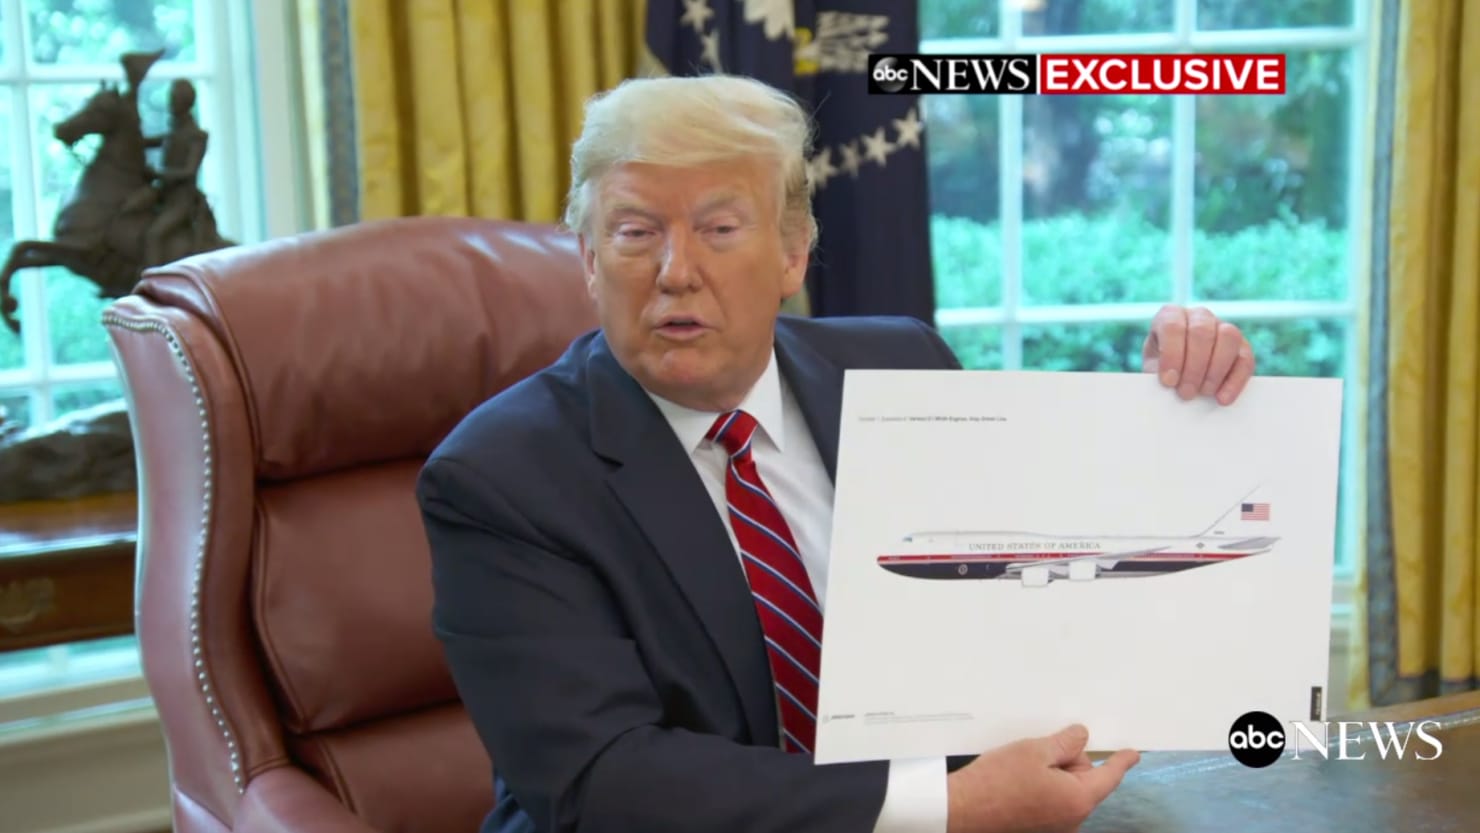 Biden drops Trump design for new Air Force One